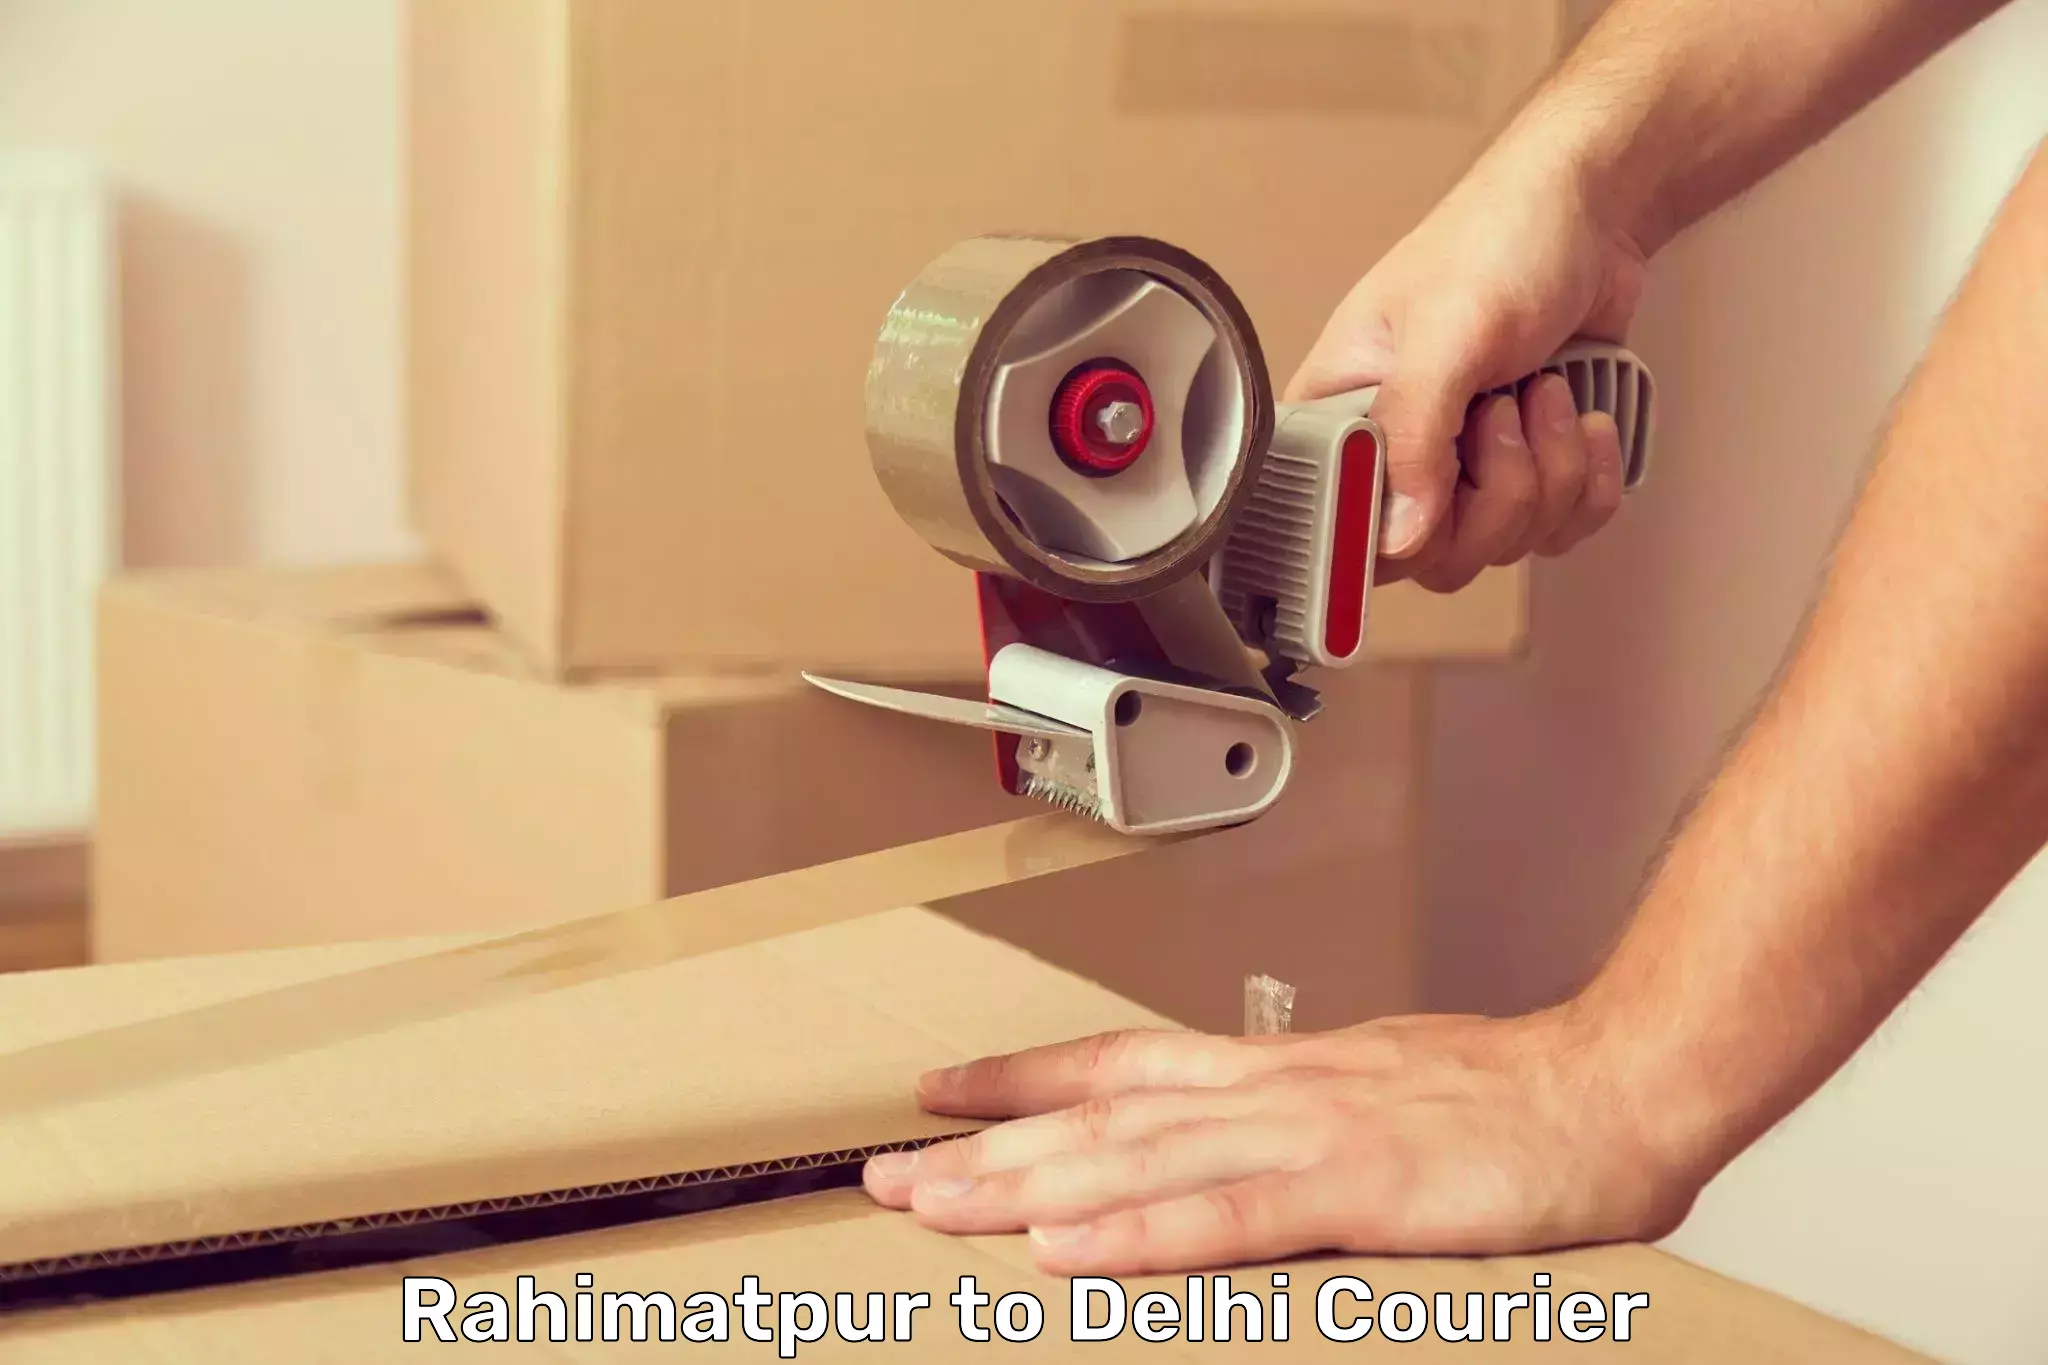 Remote area delivery Rahimatpur to Jamia Hamdard New Delhi